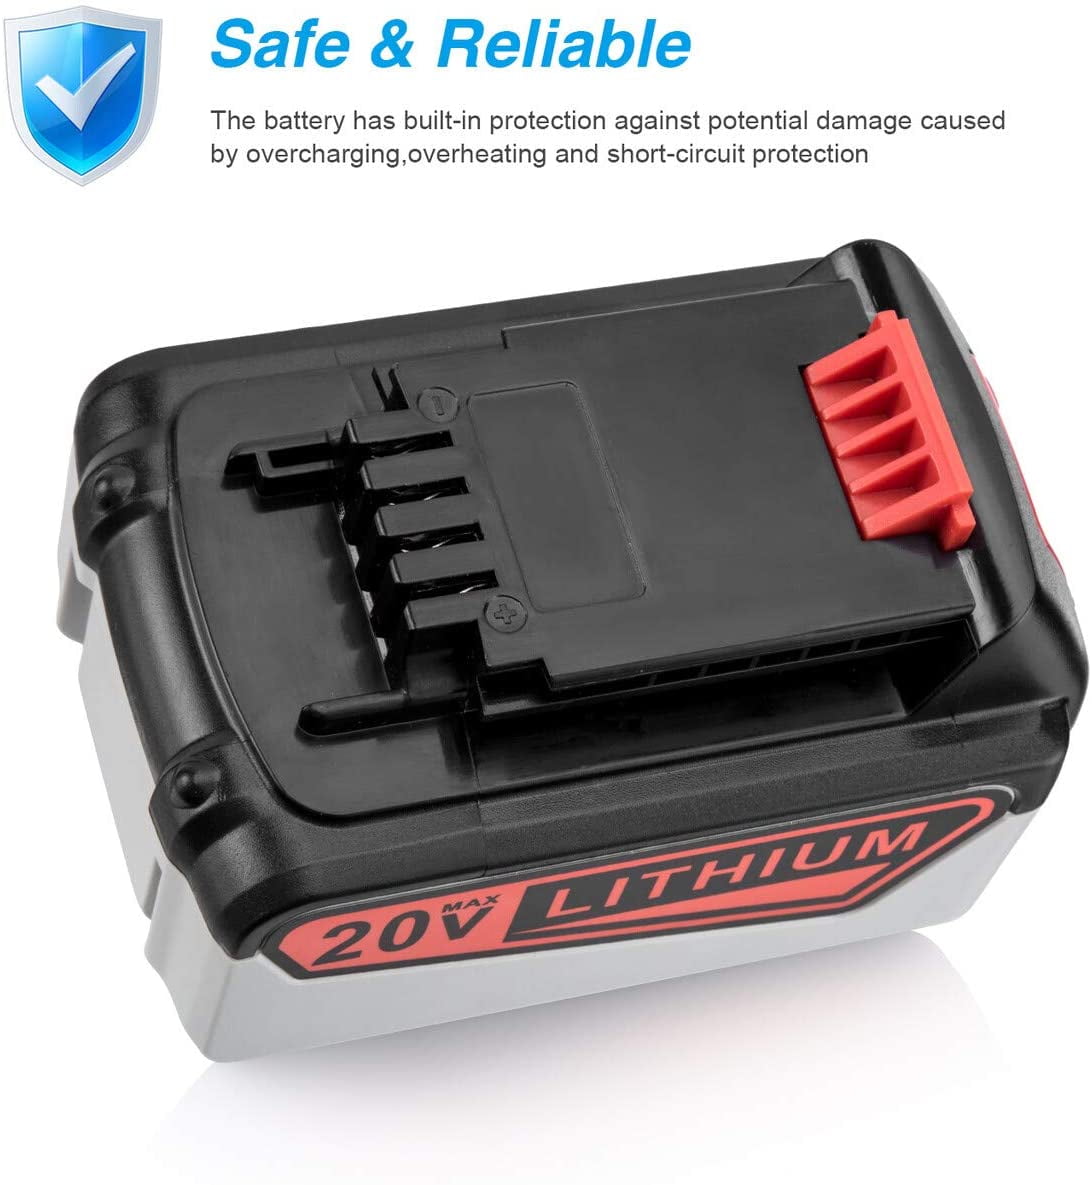 LBXR20 6.0Ah 20V MAX Replacement Lithium Battery Compatible with Black and Decker LBXR20 LB20 LBX20 LBXR2020-OPE LBXR20B-2 LB2X4020 